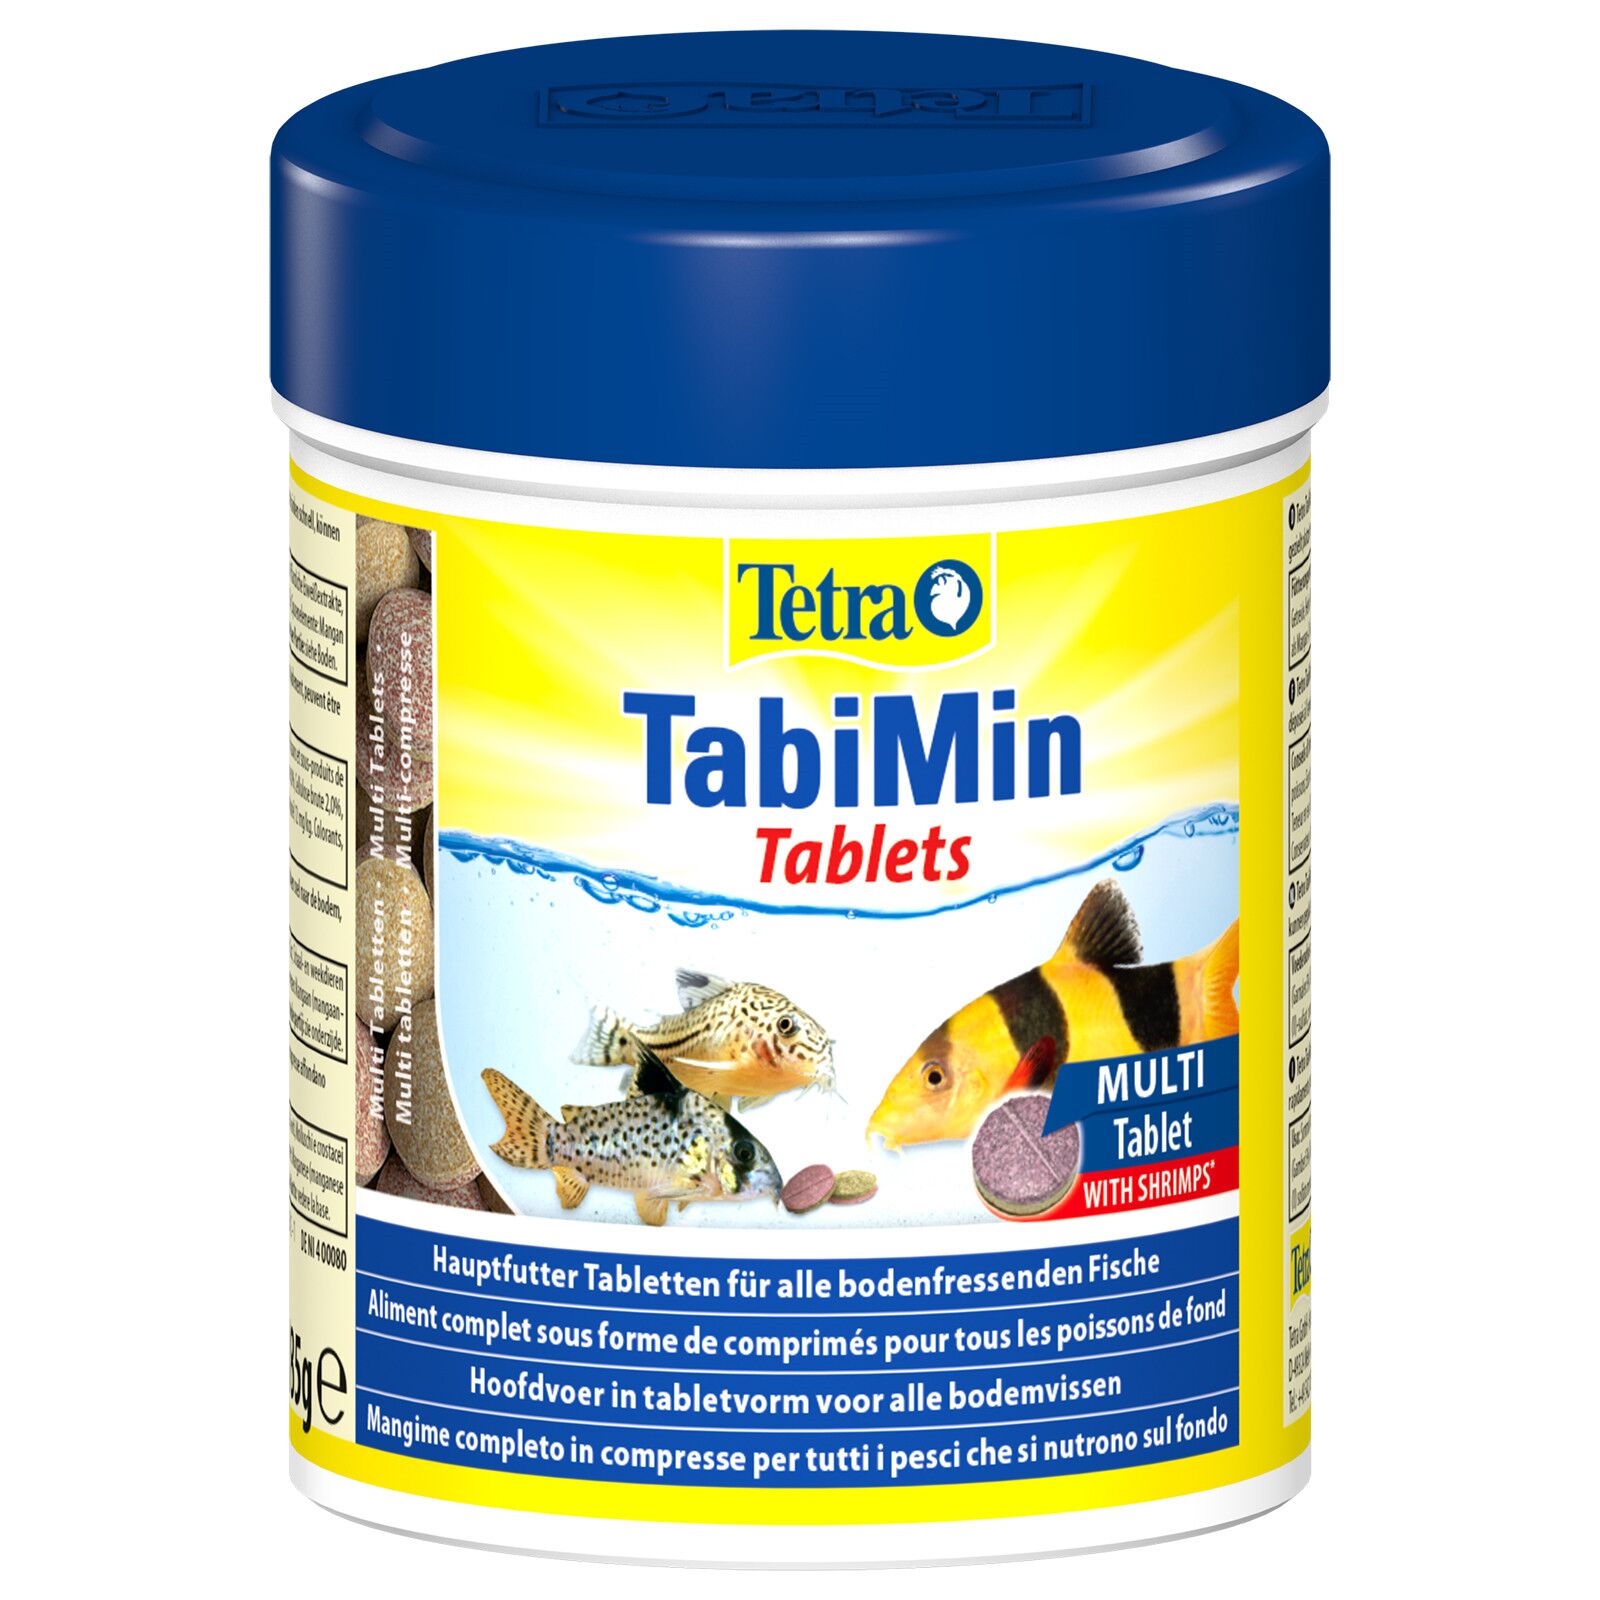 TETRA Tablets TabiMin XL aliment sous forme de comprimés de haute